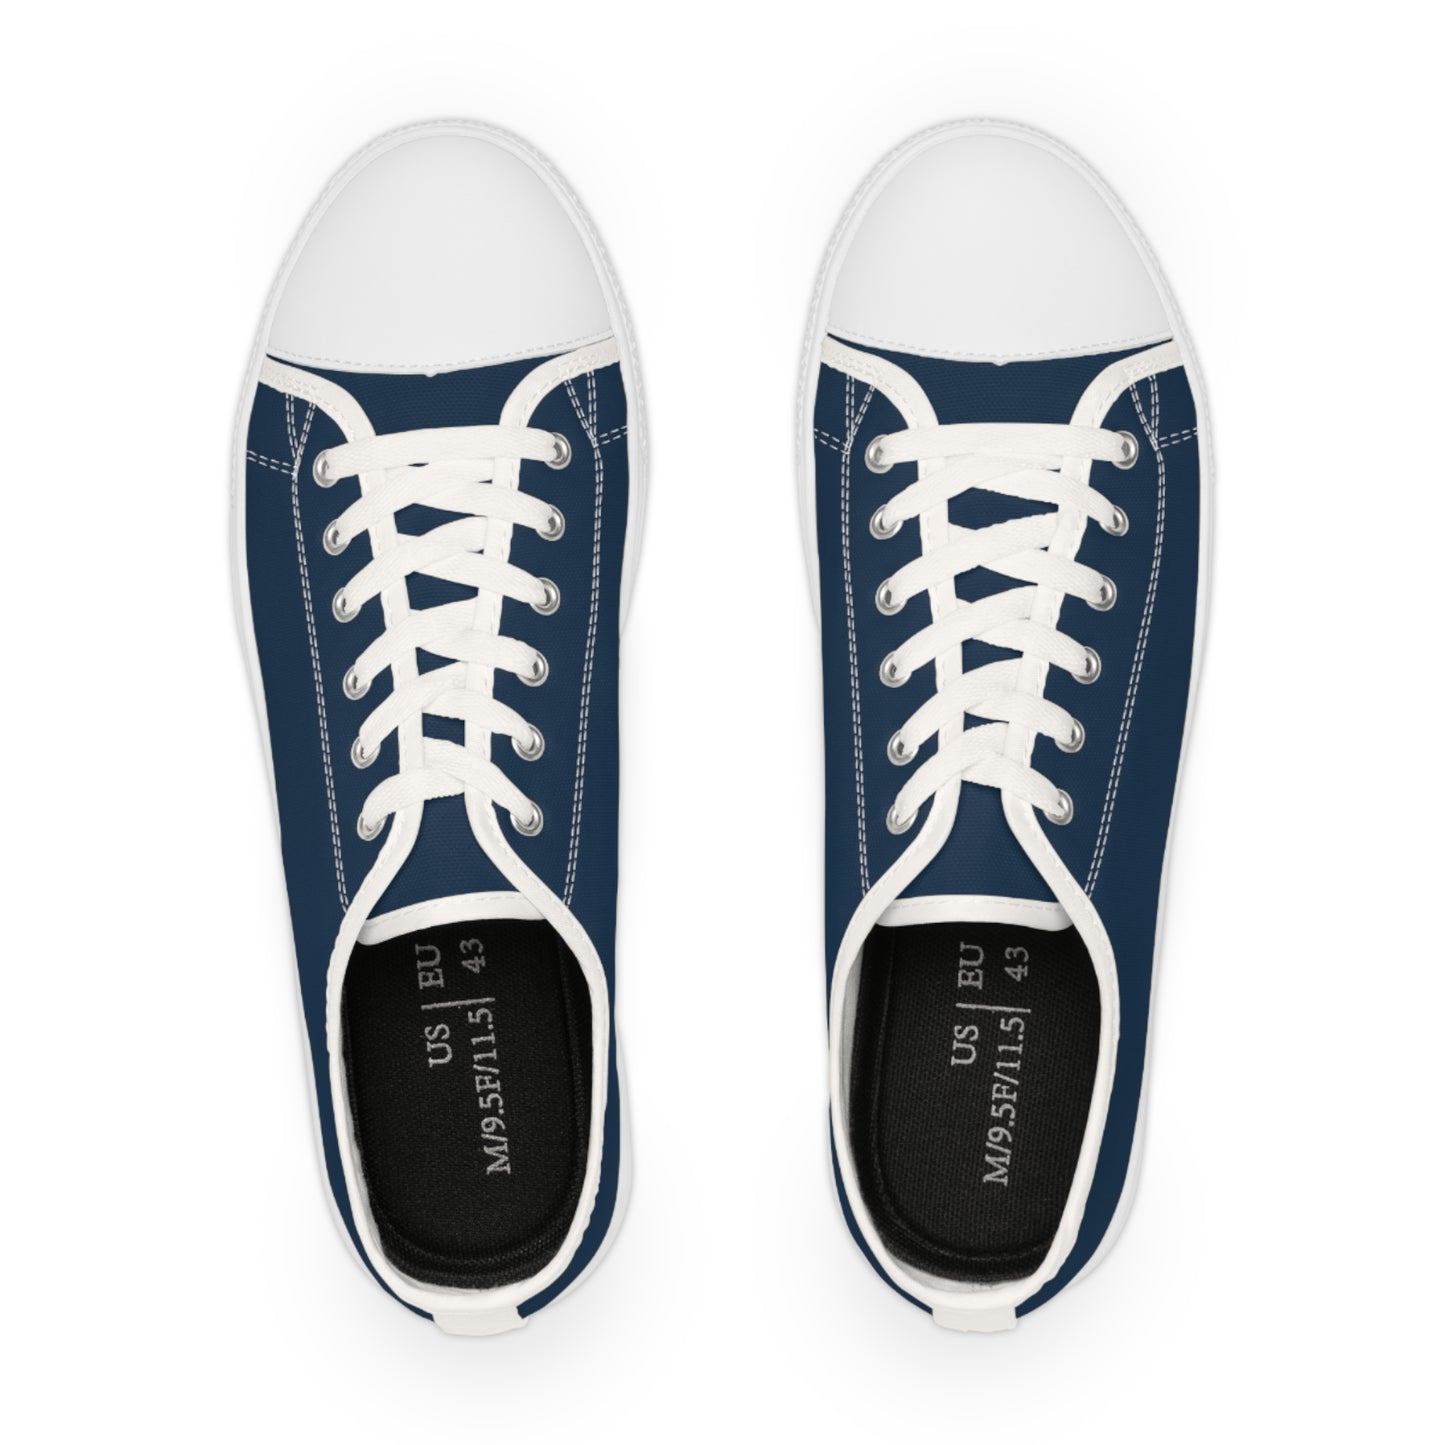 Men's Canvas Low Top Solid Color Sneakers - Ink Blue US 14 Black sole